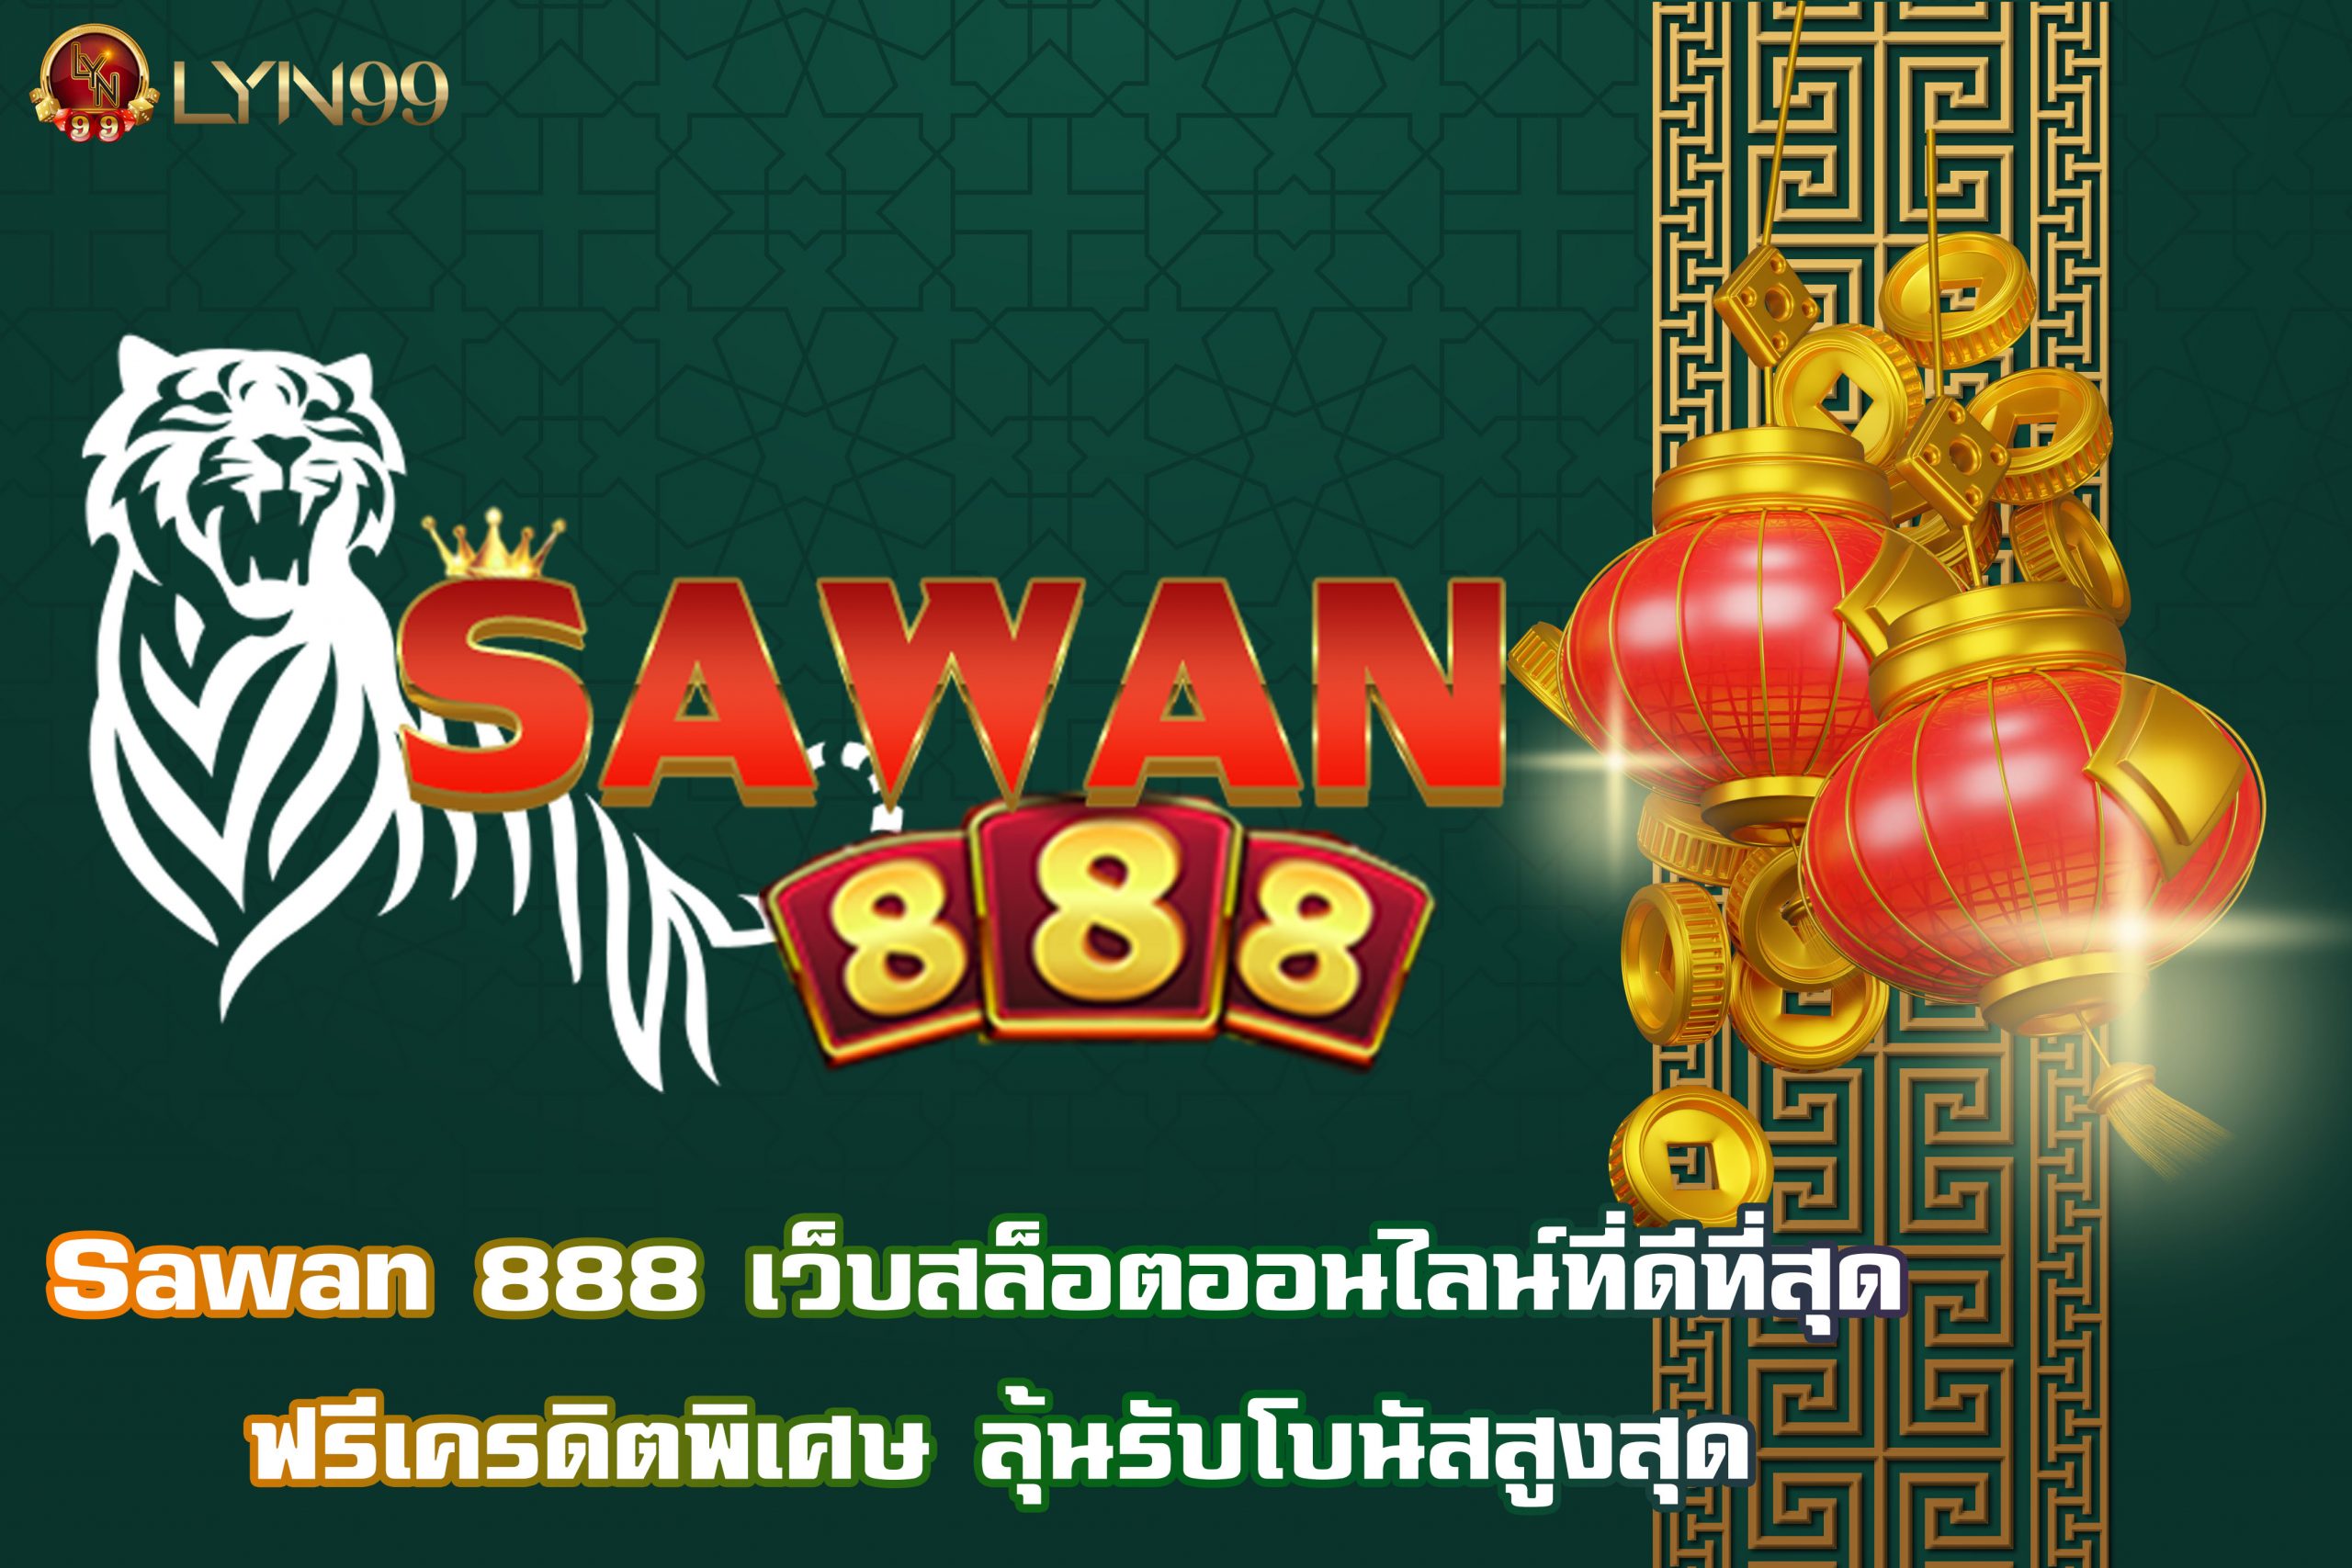 Sawan 888 เว็บสล็อตออนไลน์ที่ดีที่สุด ฟรีเครดิตพิเศษ ลุ้นรับโบนัสสูงสุด